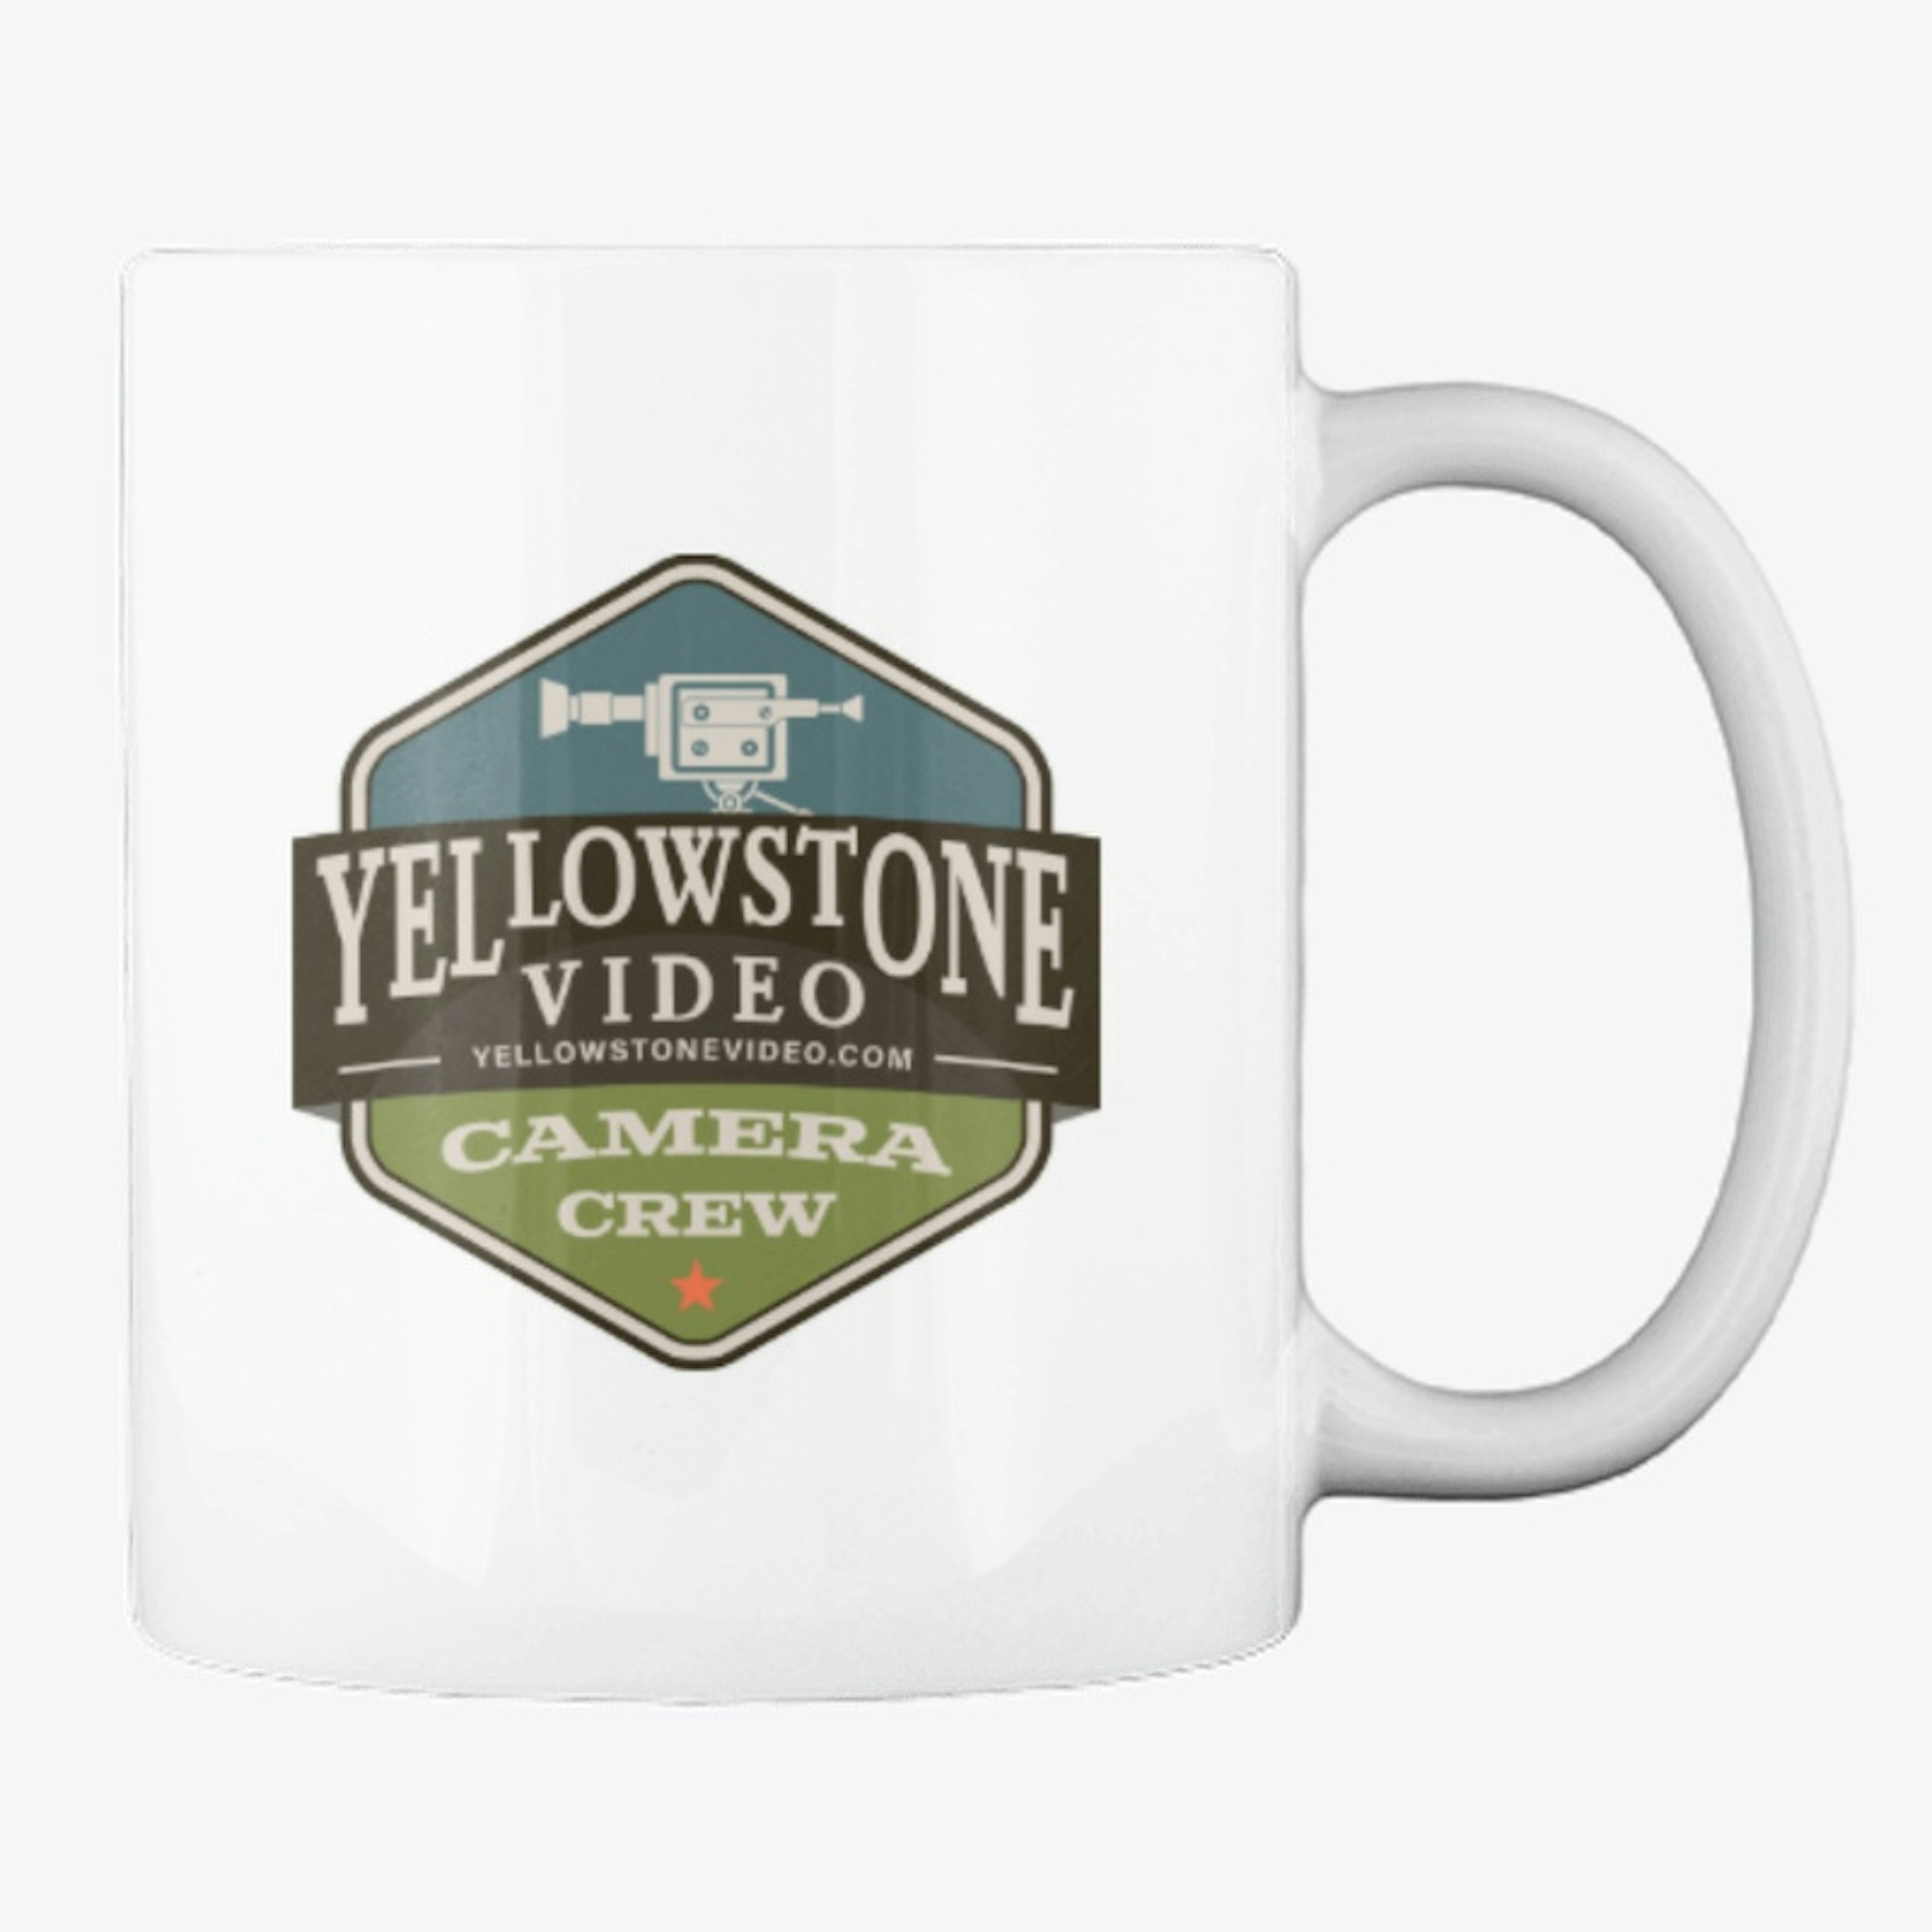 Yellowstone Video Staff Goods